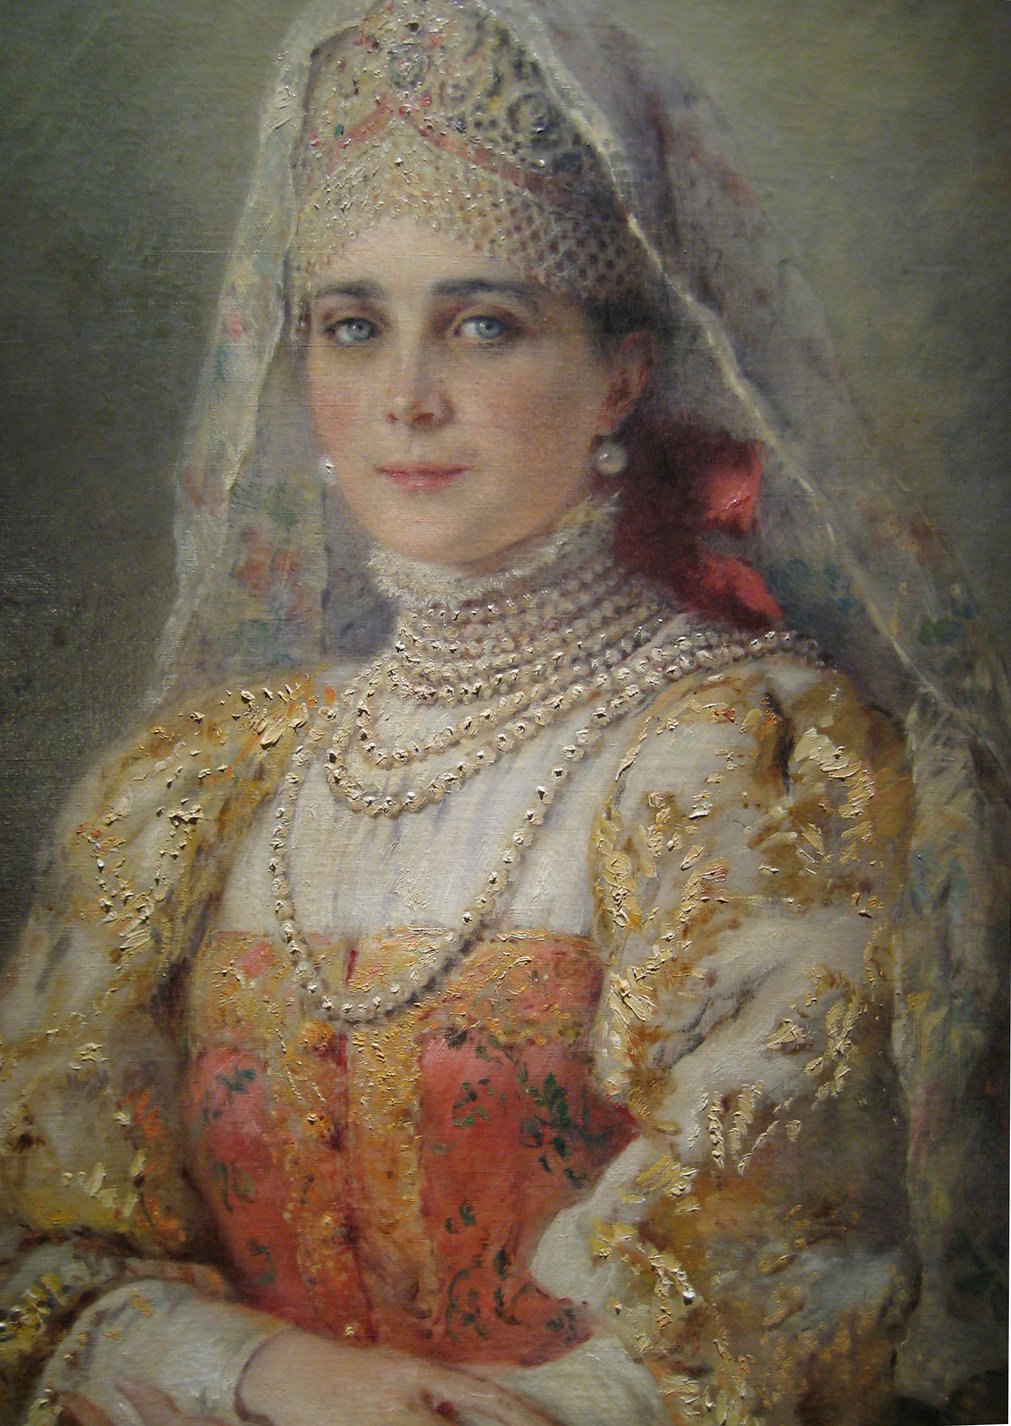 Файл:Zinaida Yusupova by Makovskiy - detail 01.jpg — Википедия